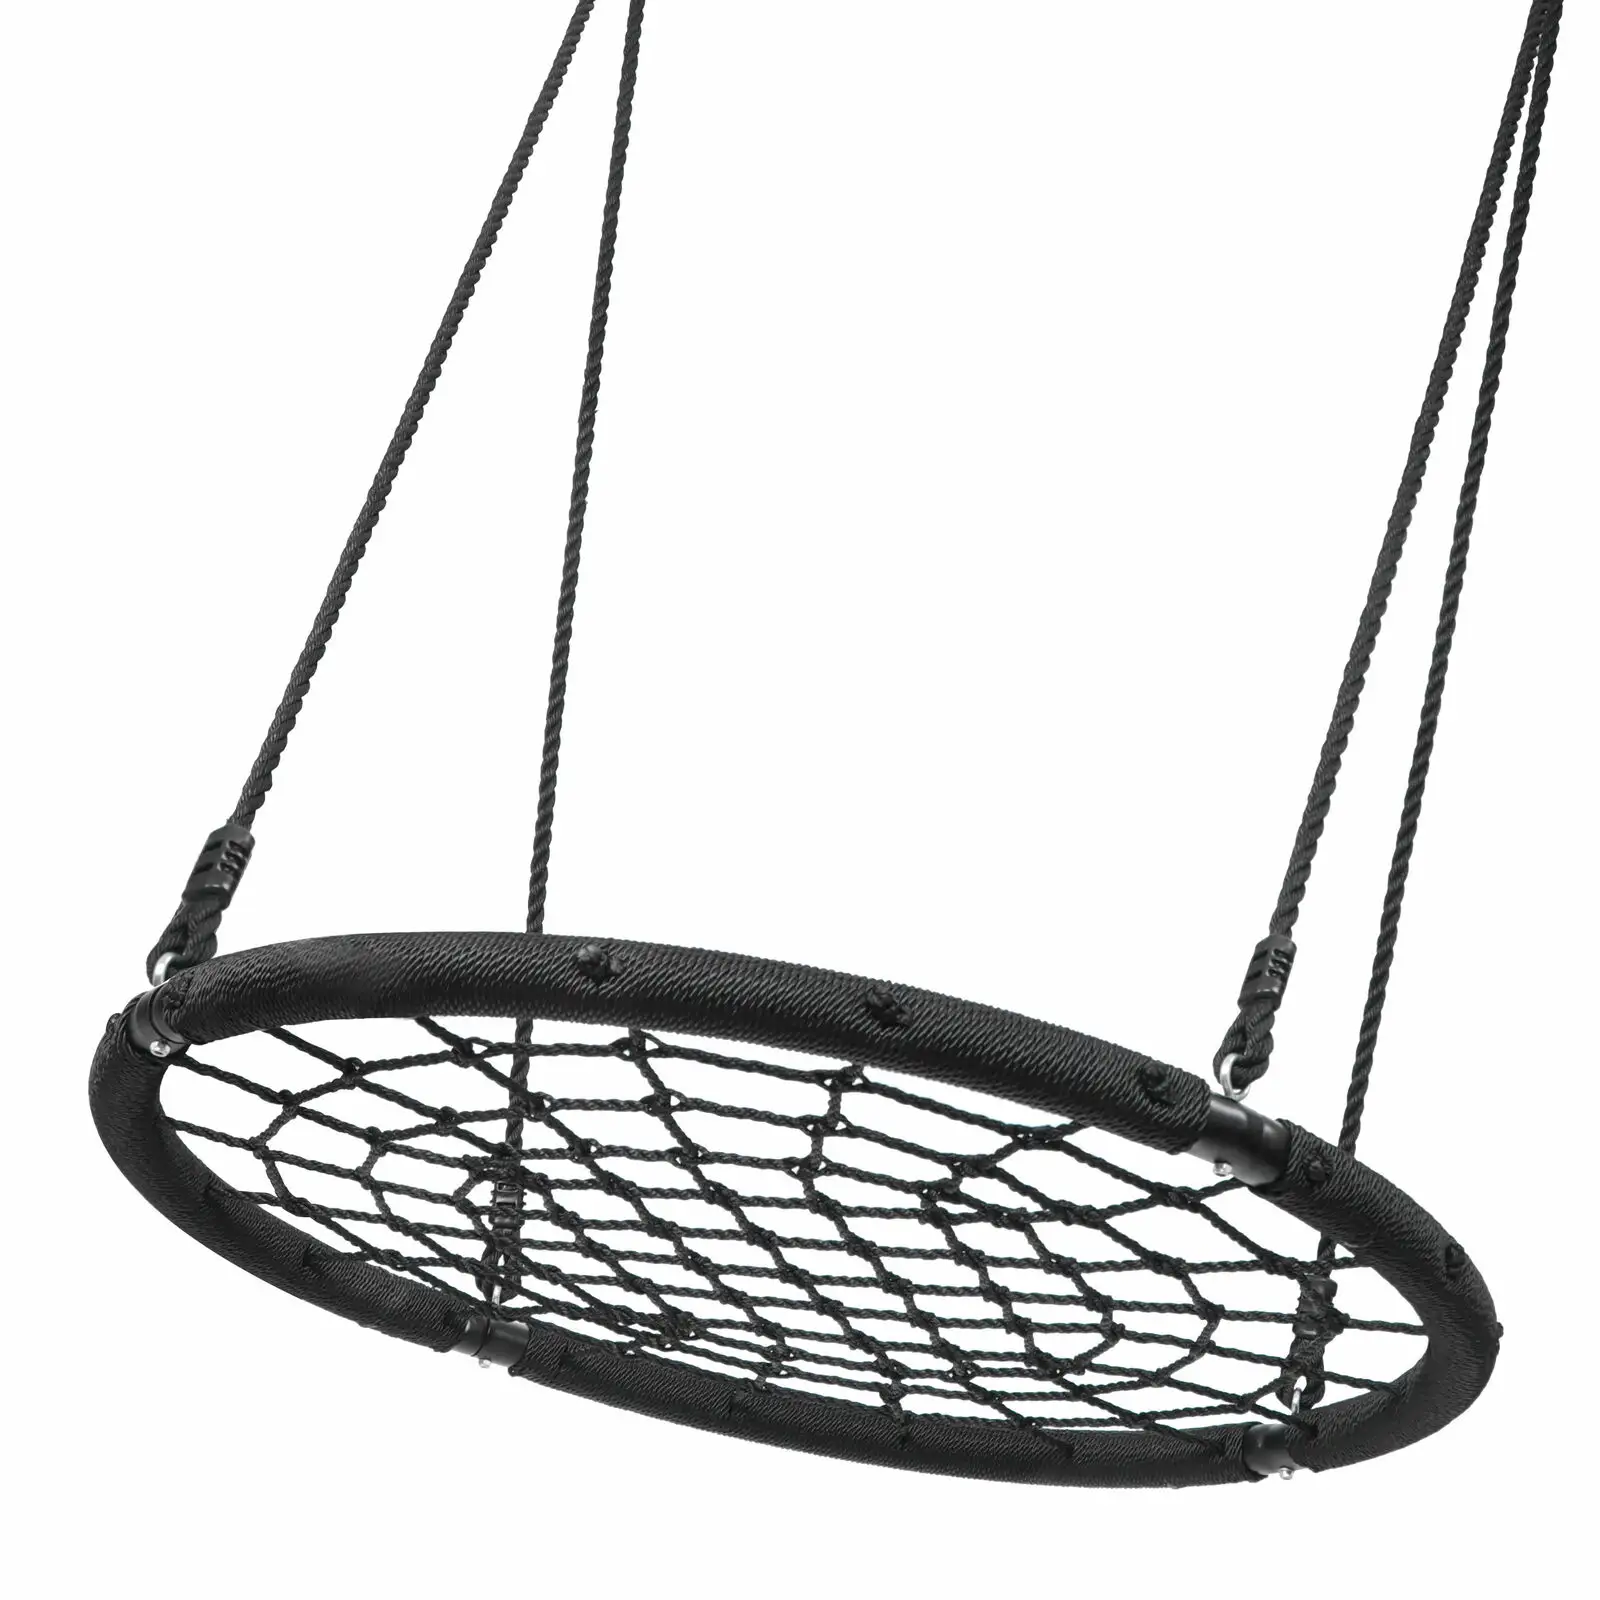 39 inch Spider Web Tree Swing Outdoor Saucer Net Swing Platform Backyard Round Flying Swing